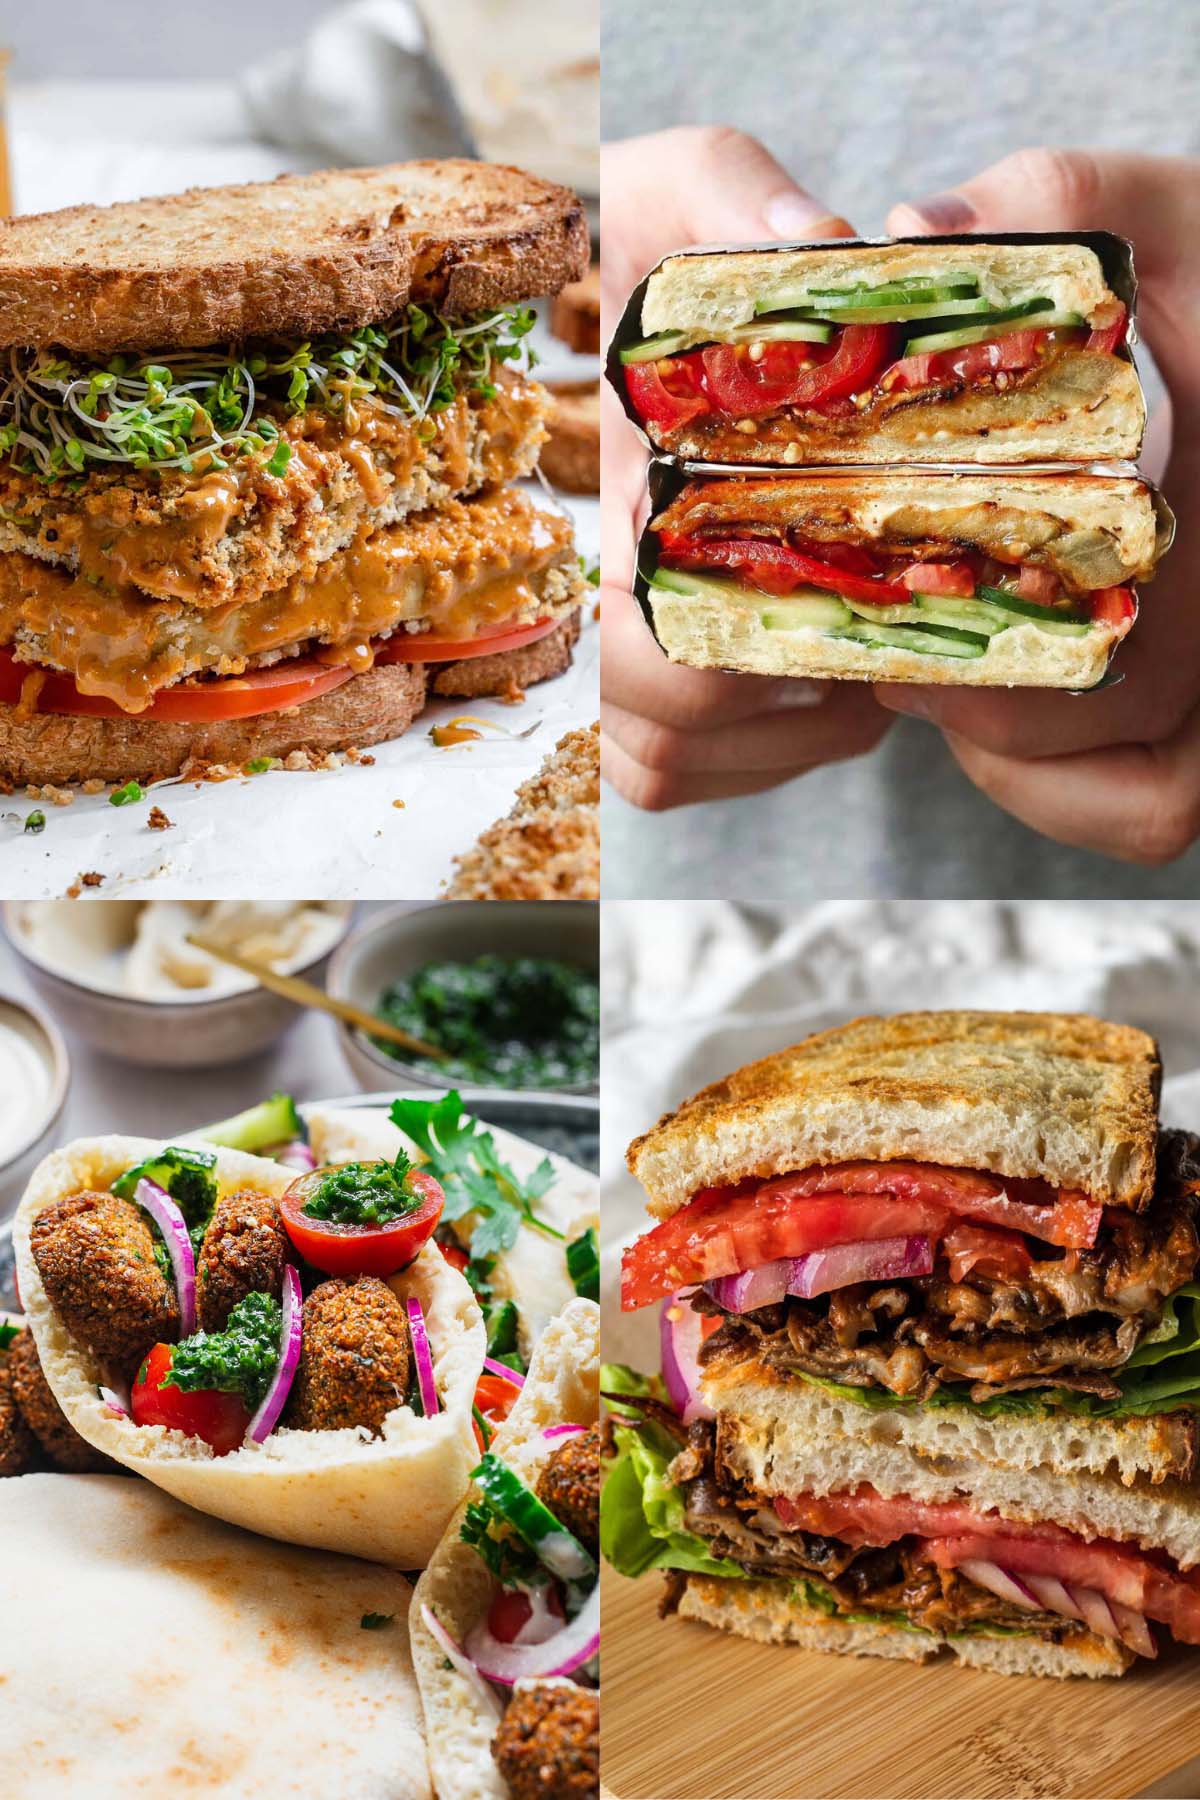 4 photos of vegan sandwiches.